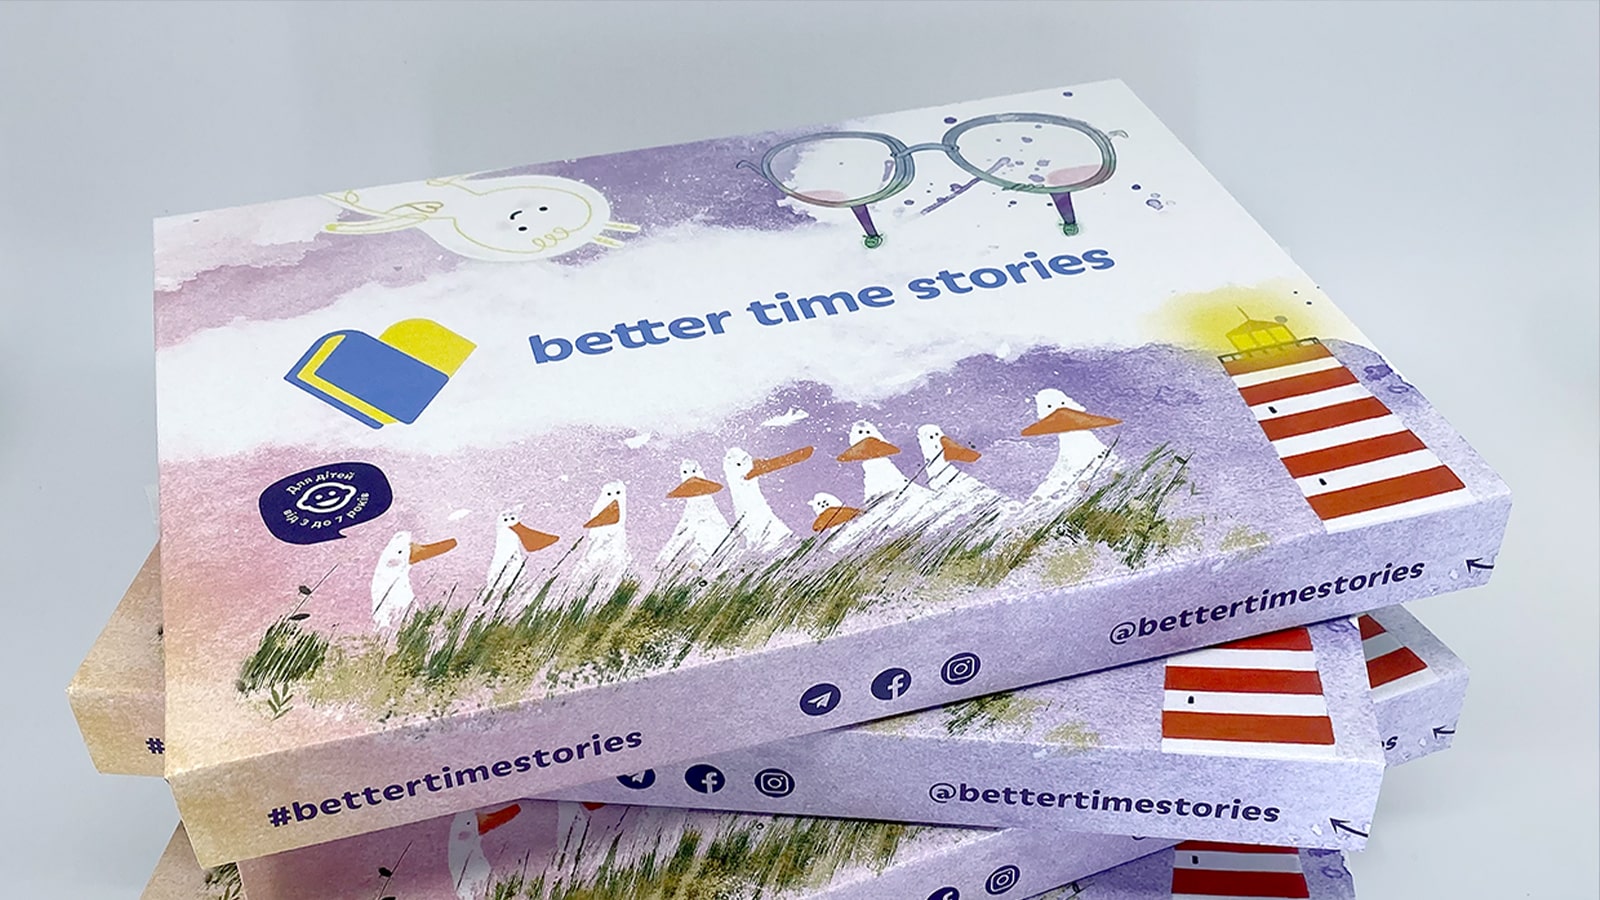 Better Times Stories - ecommerce book packaging 169-min.jpg